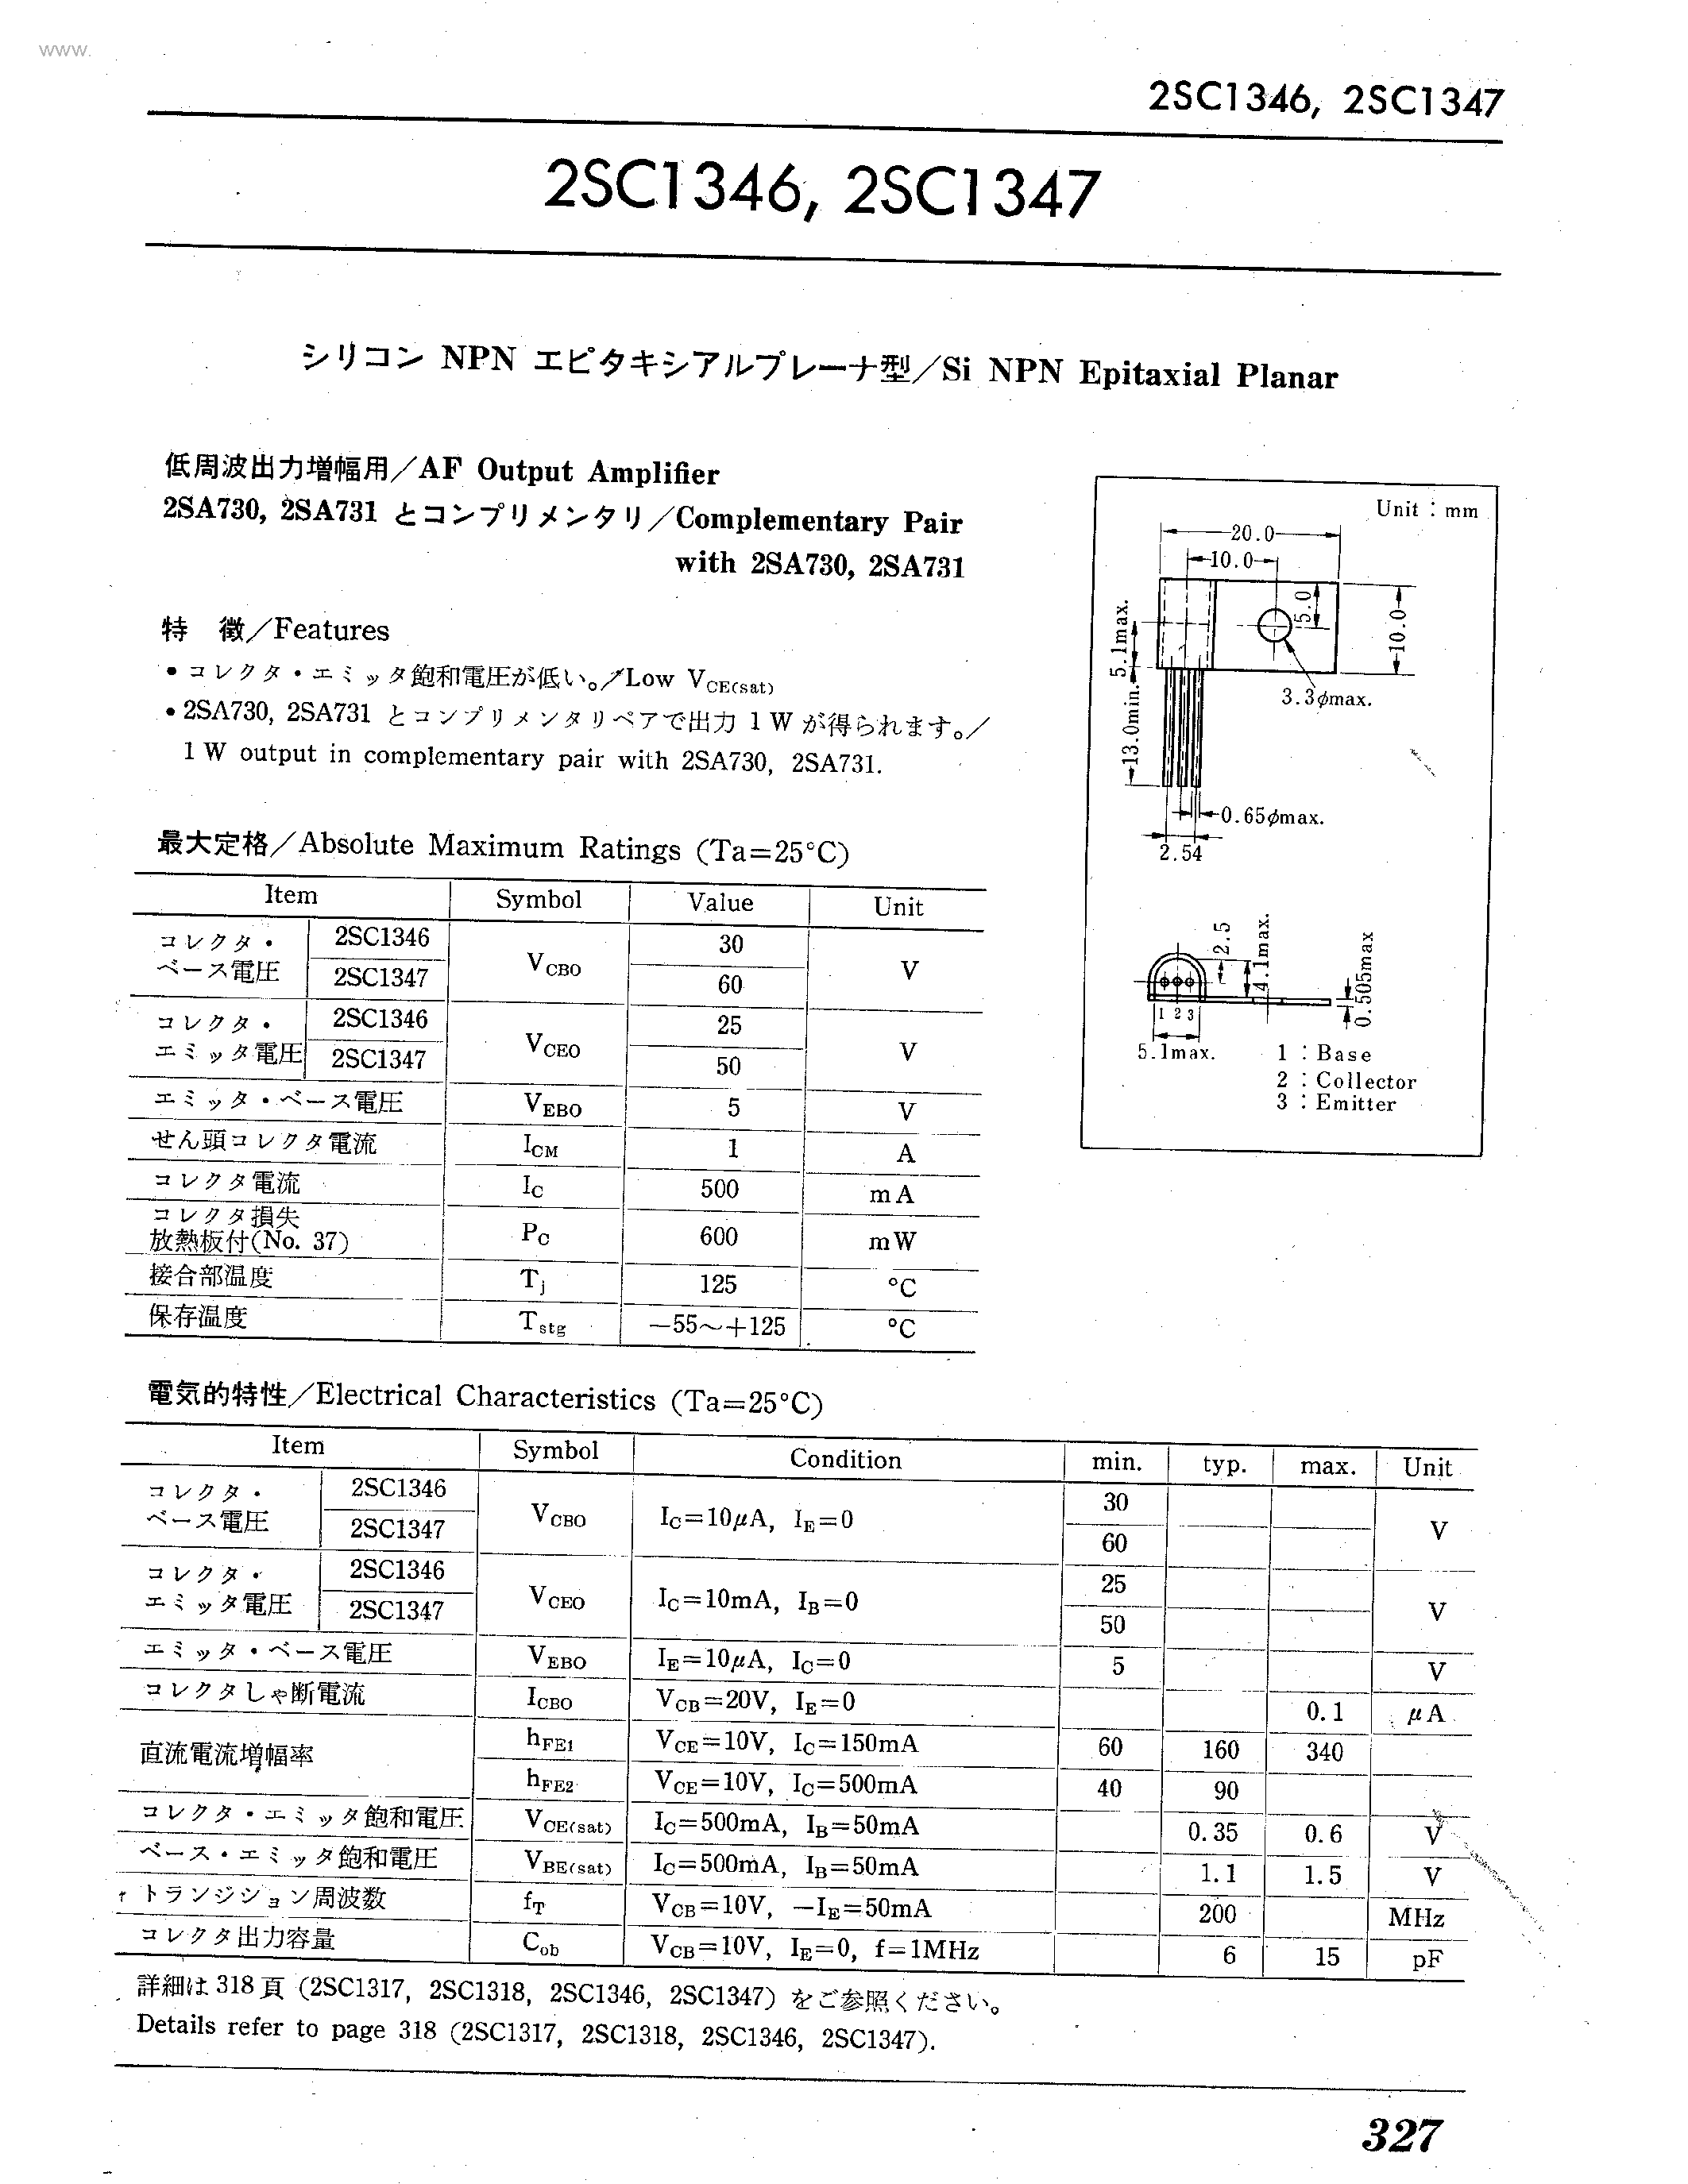 Даташит 2SC1346 - (2SC1346 / 2SC1347) Si NPN Epitaxial Planar AF Output Amplifier страница 1